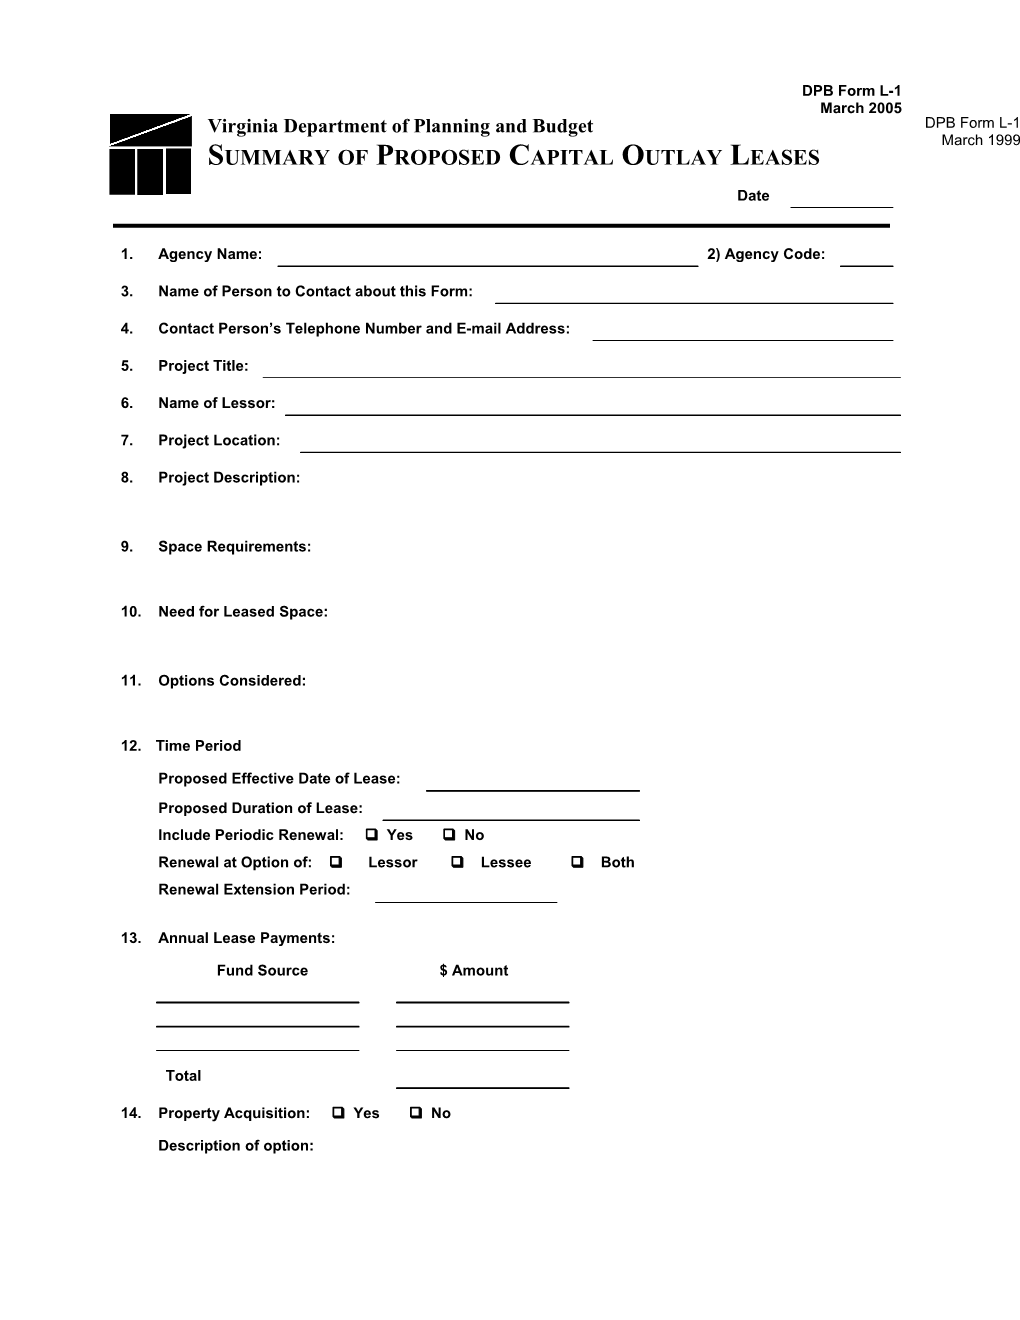 Instructions for DPB Form L-1